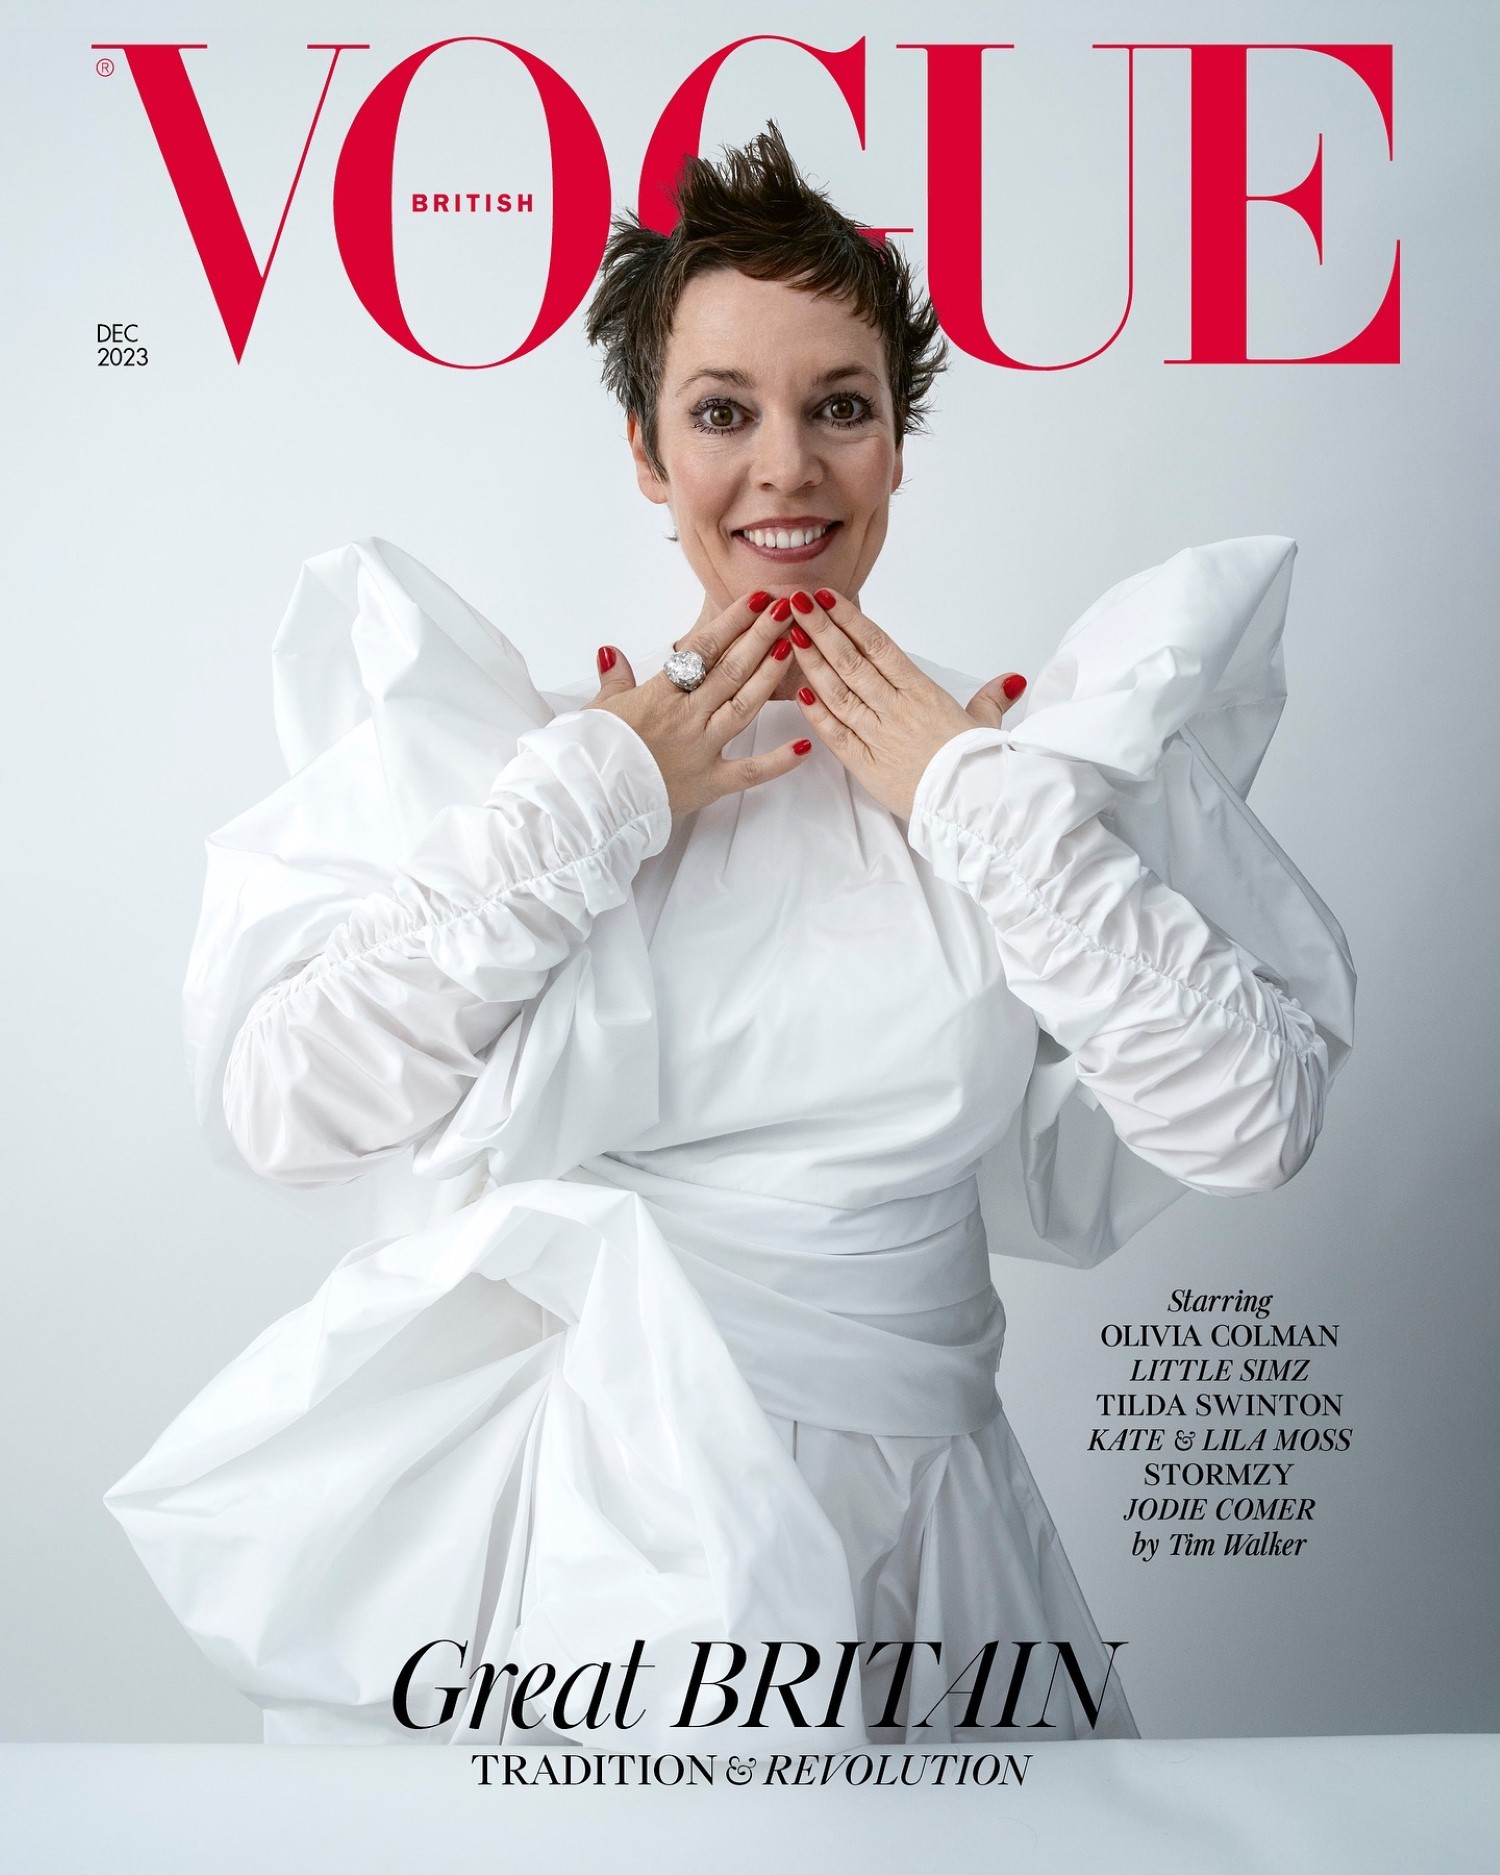 British Vogue December 2023 covers by Tim Walker